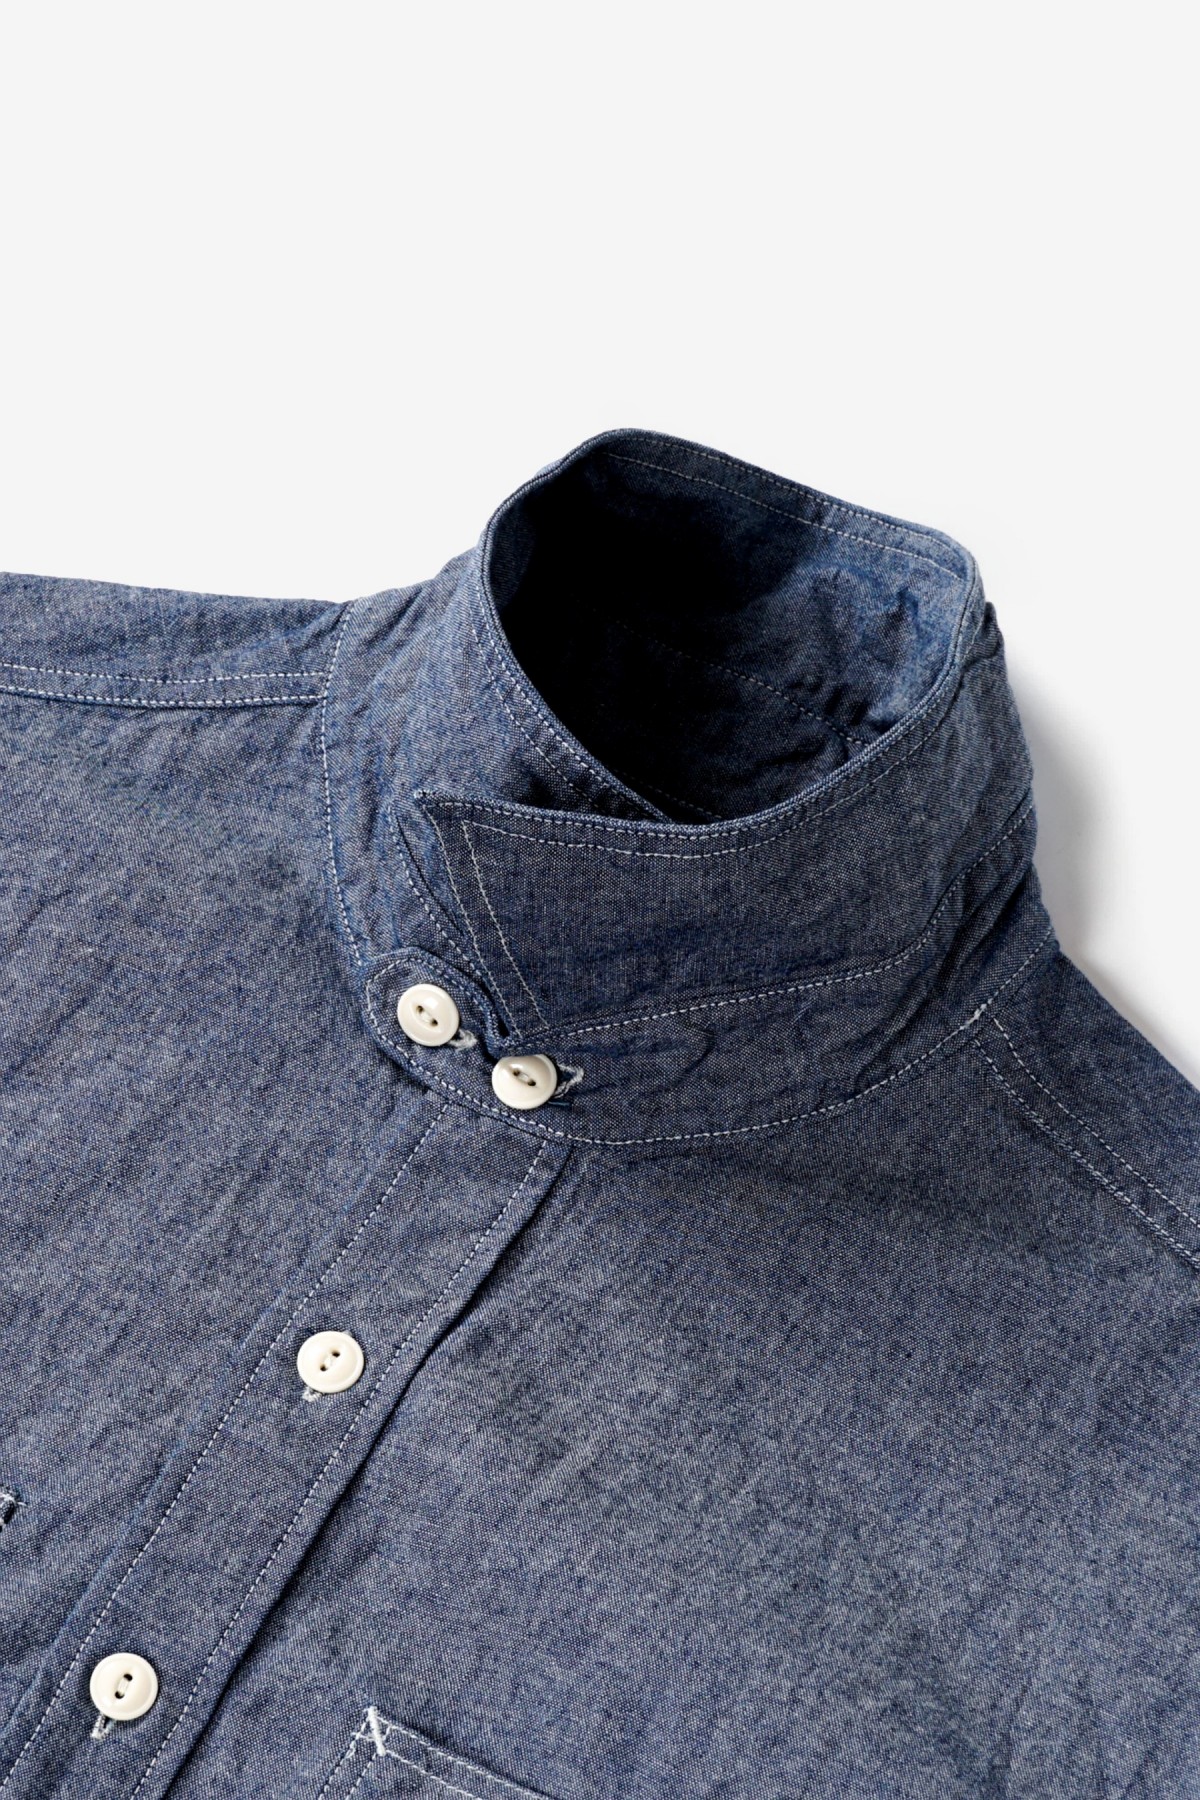 Engineered Garments Workaday Utility Shirt in Indigo Cotton Raw Chambray